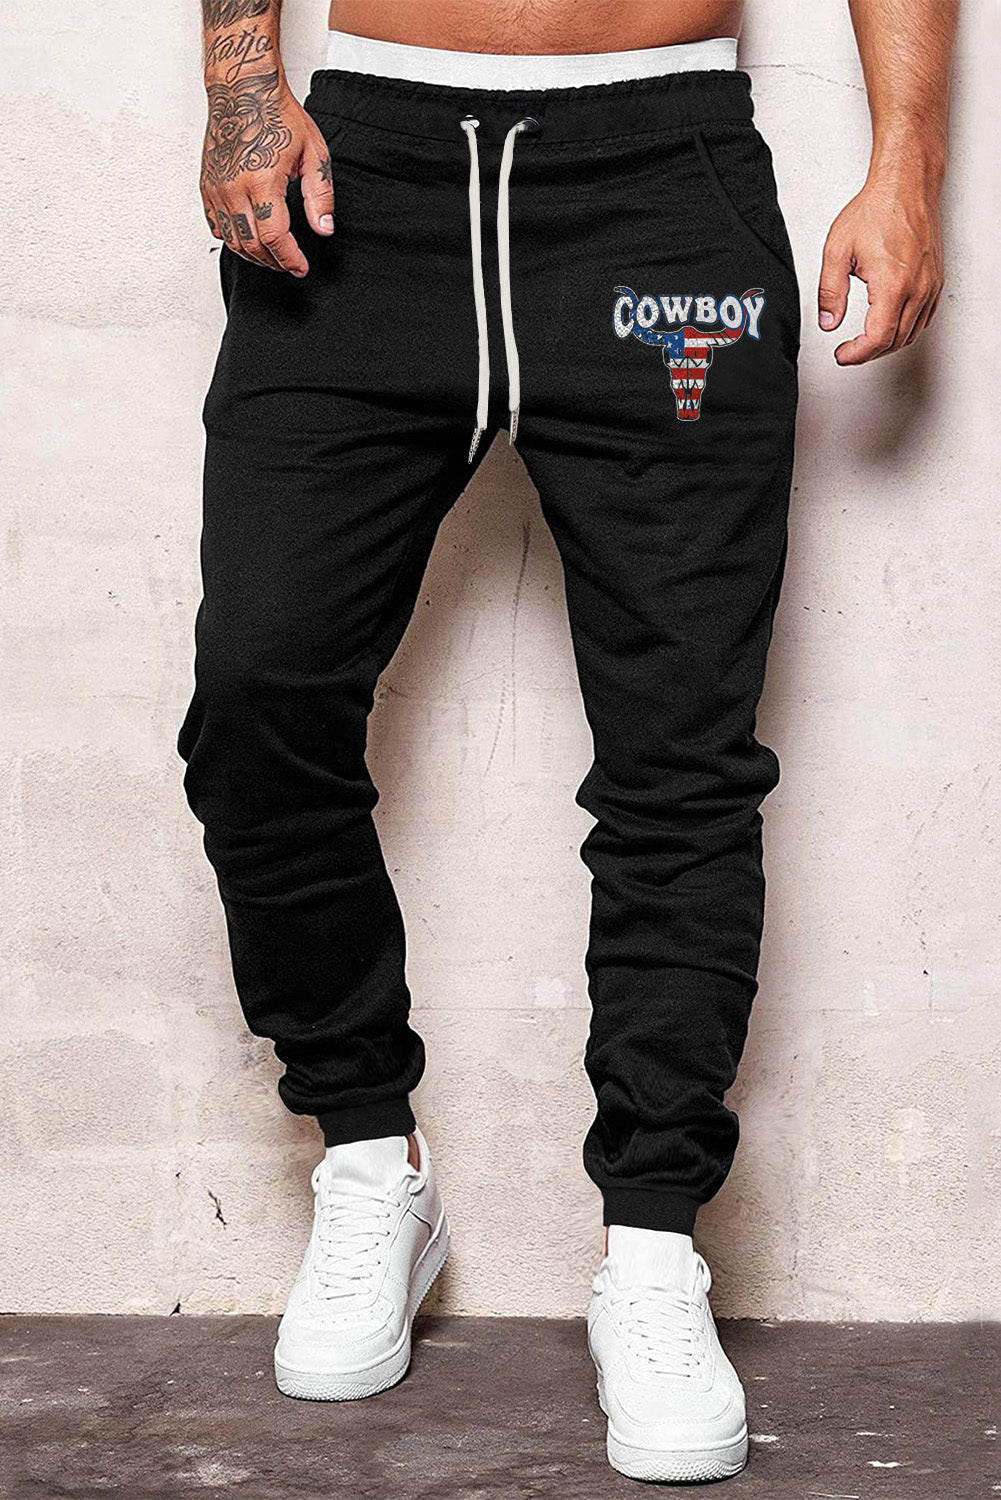 Black COWBOY Steer Head Print Drawstring High Waist Men's Sweatpants Black 65%Polyester+35%Cotton Men's Pants JT's Designer Fashion